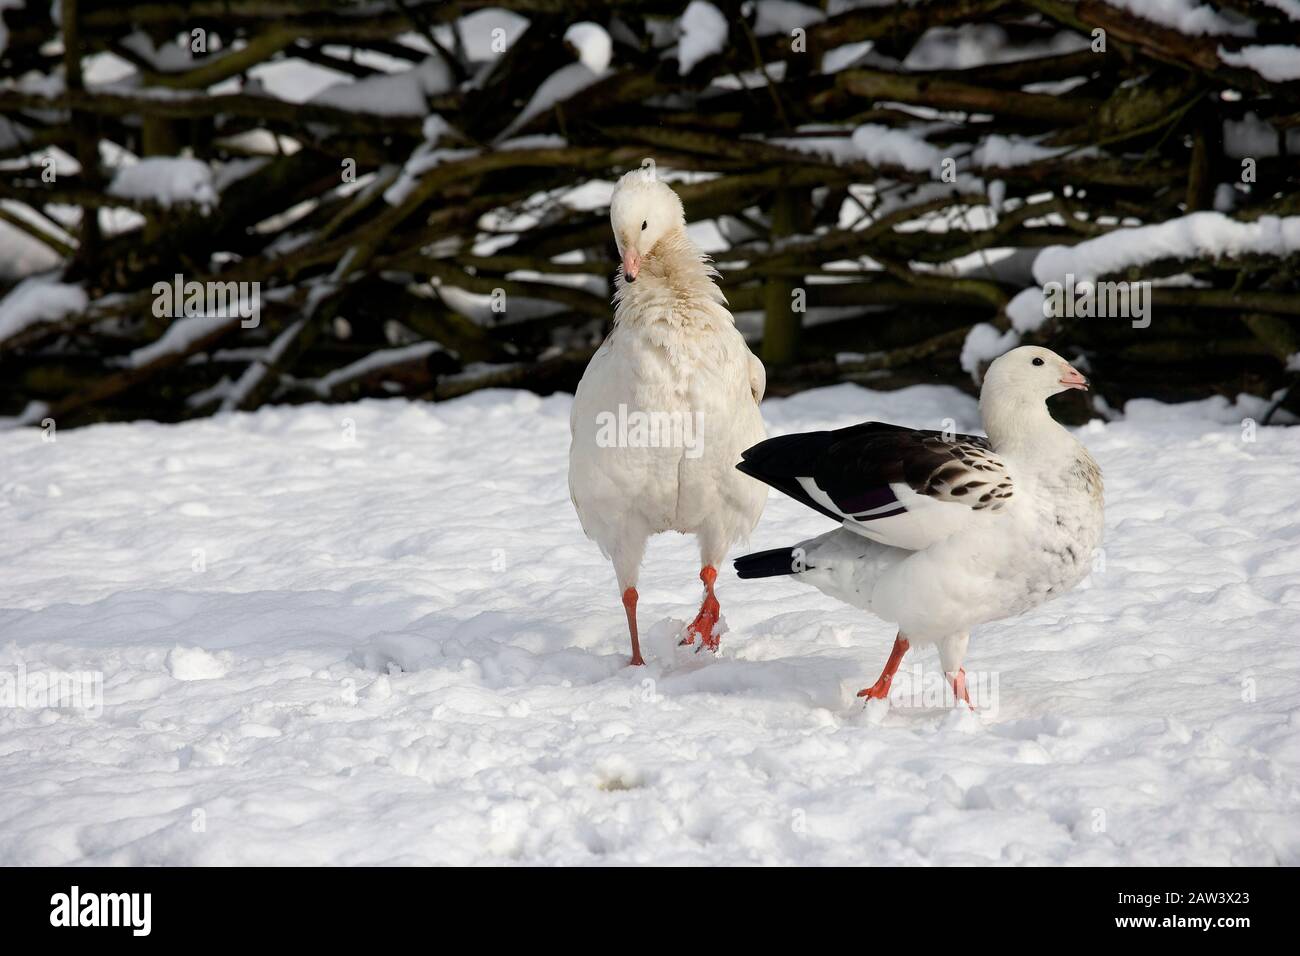 Andean Goose, chloephaga melanoptera, Pair standing on Snow Stock Photo